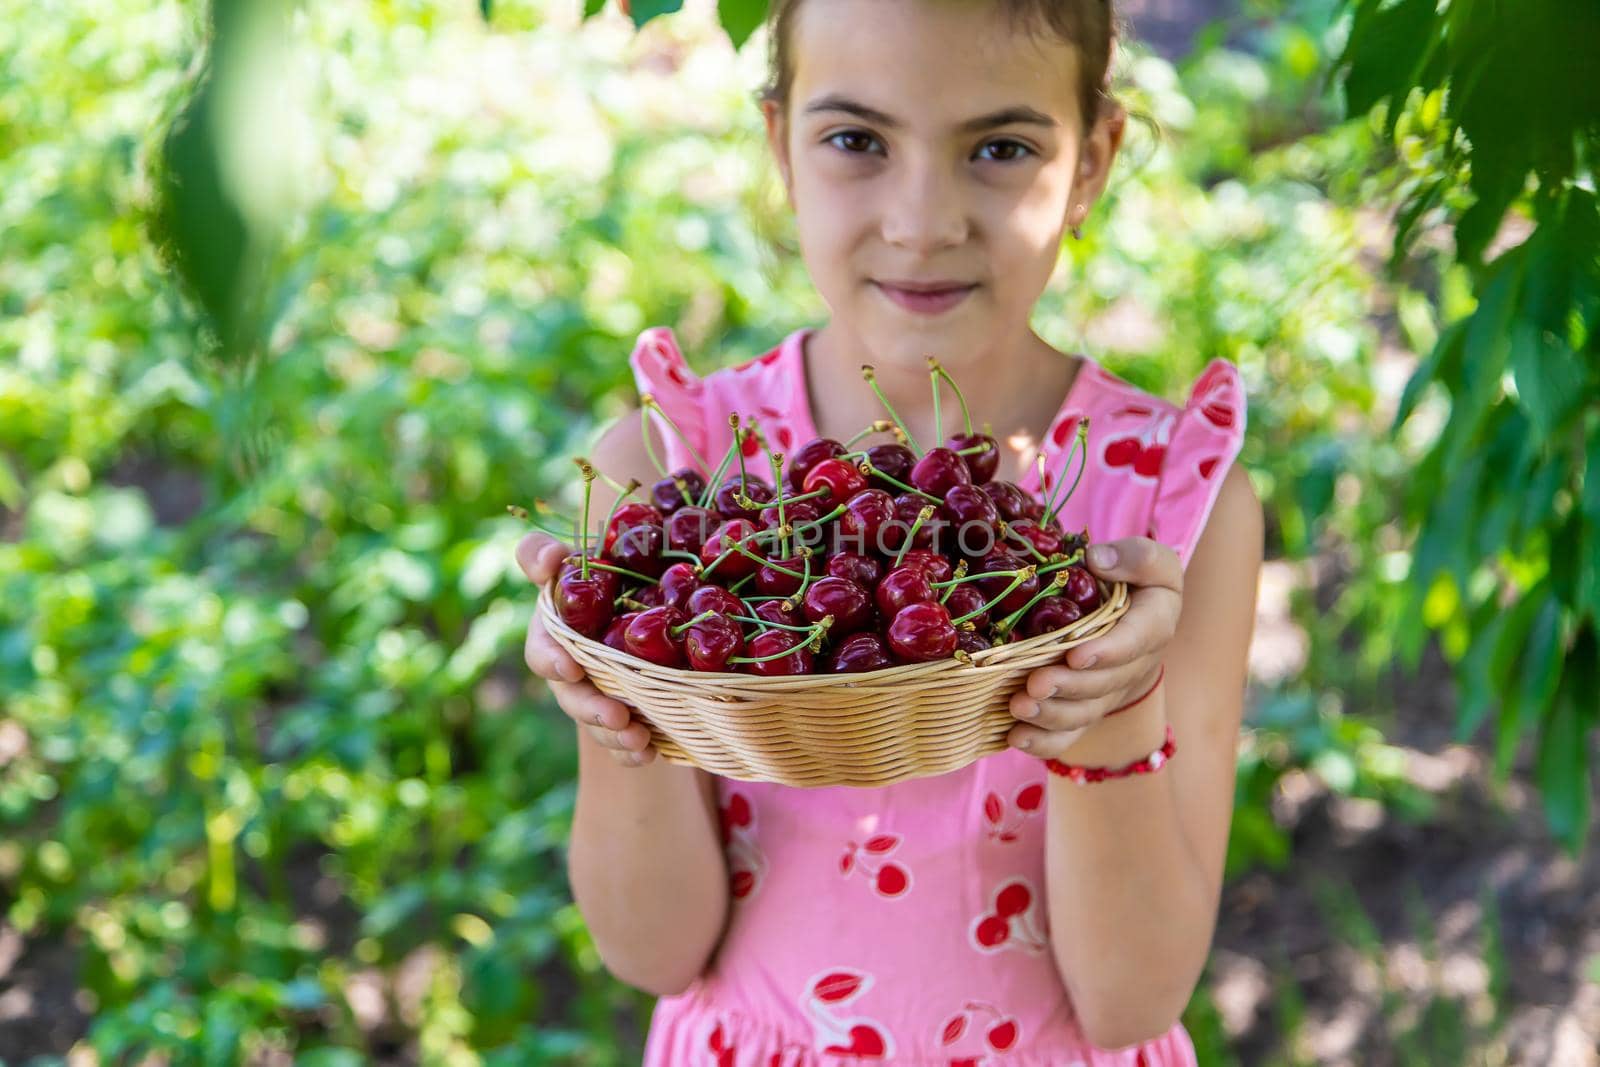 A child harvests cherries in the garden. Selective focus. Food.